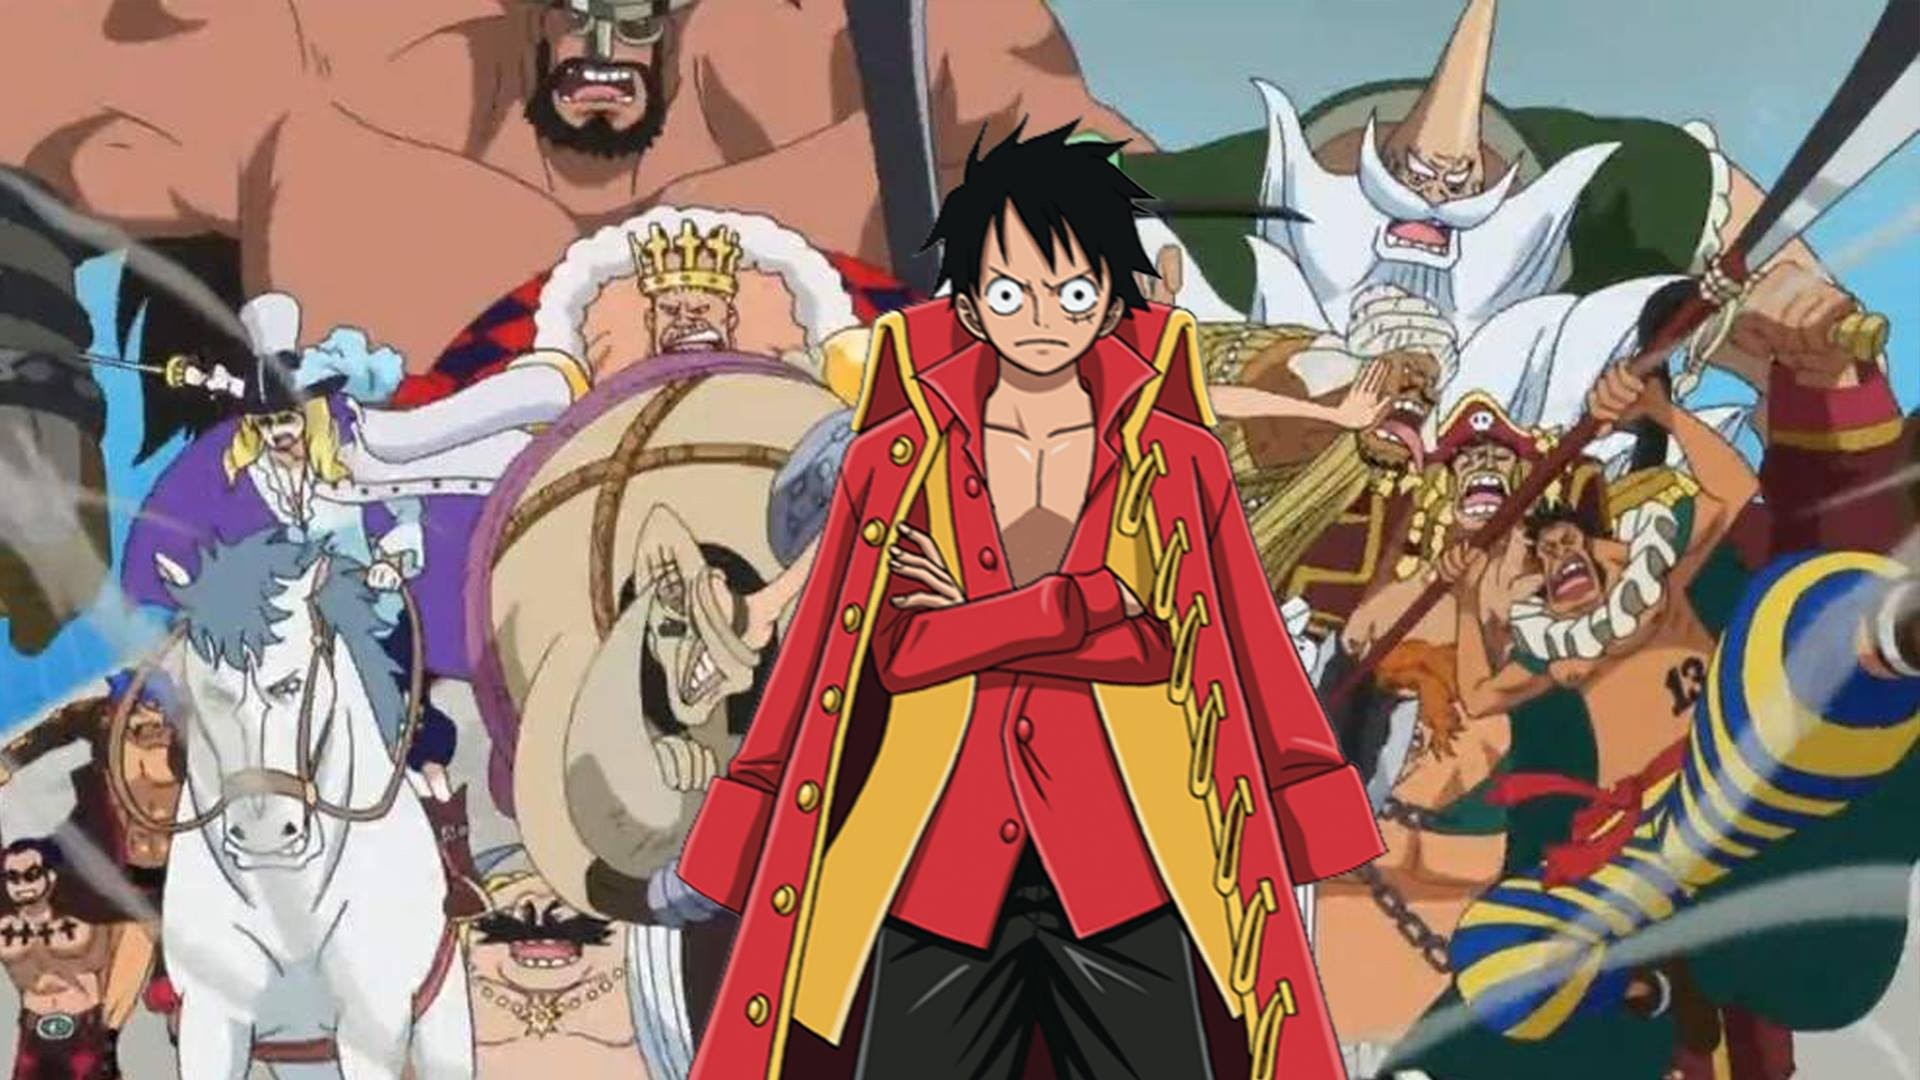 1920x1080 One Piece 800 Manga Chapter ã¯ã³ãã¼ã¹ Review -- Luffy's Fleet Army Vs Fujitora  Finale